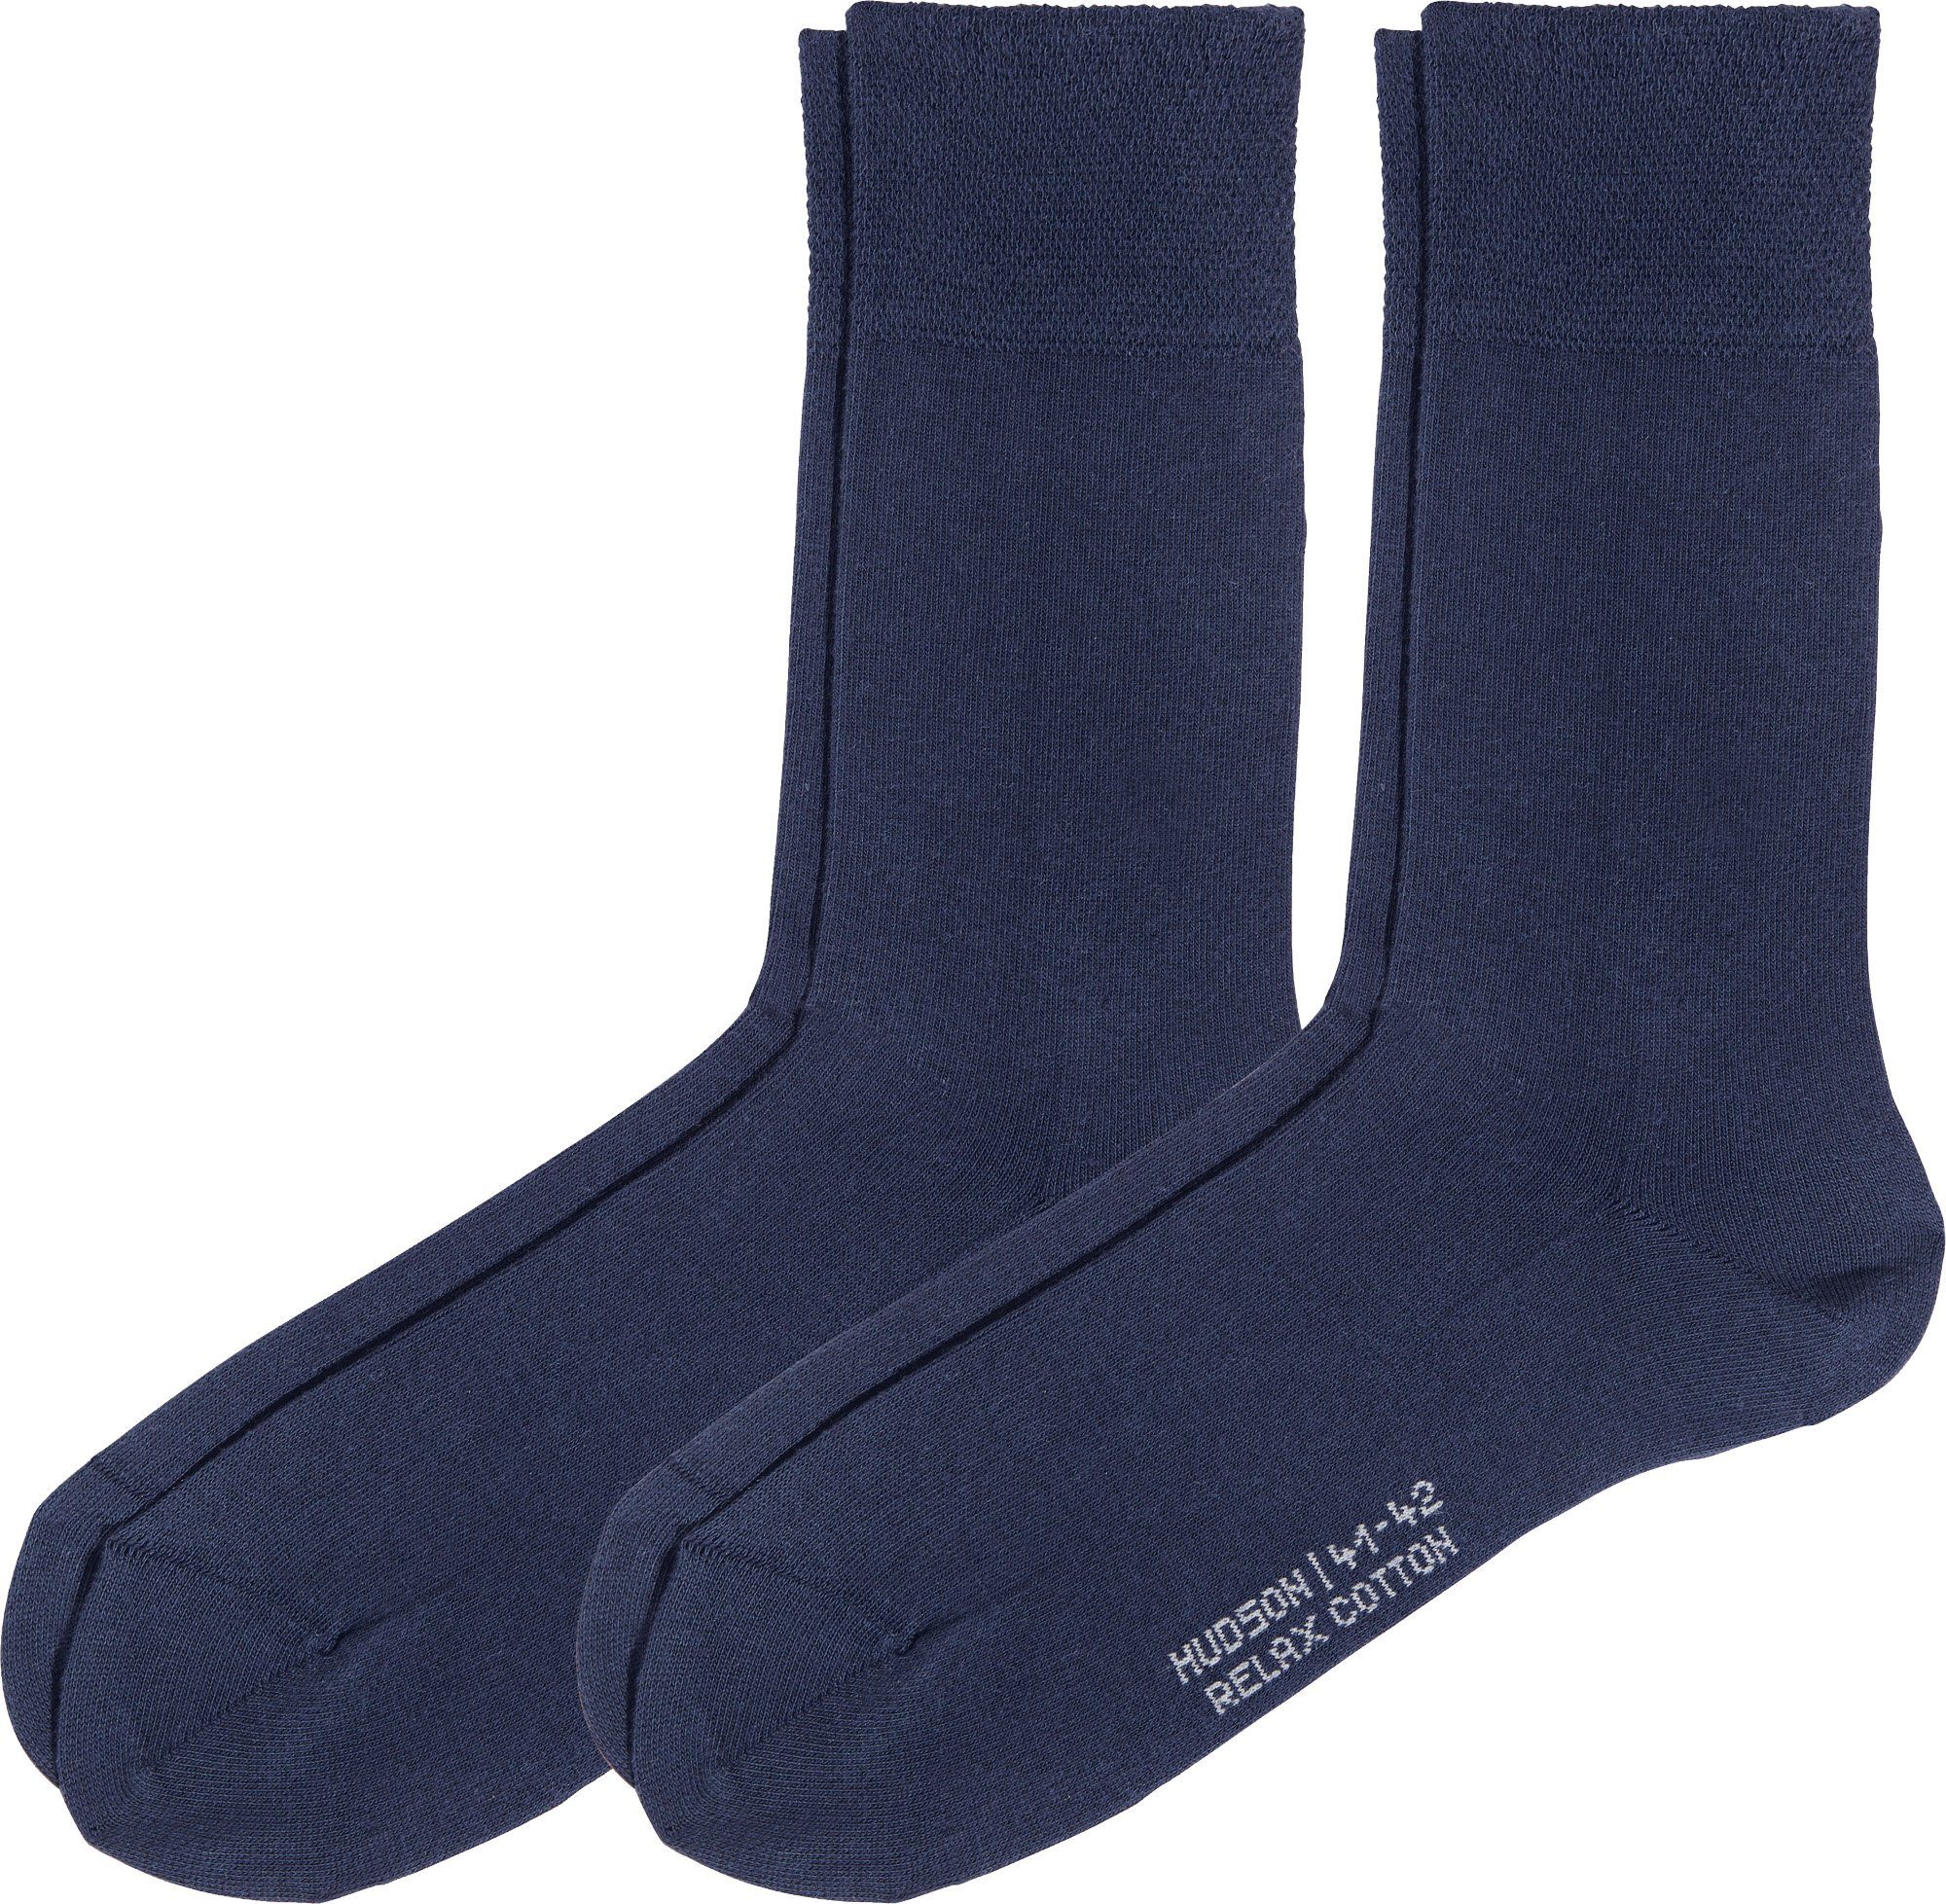 Hudson Socken Herren-Socken 2 Paar Uni online kaufen | OTTO